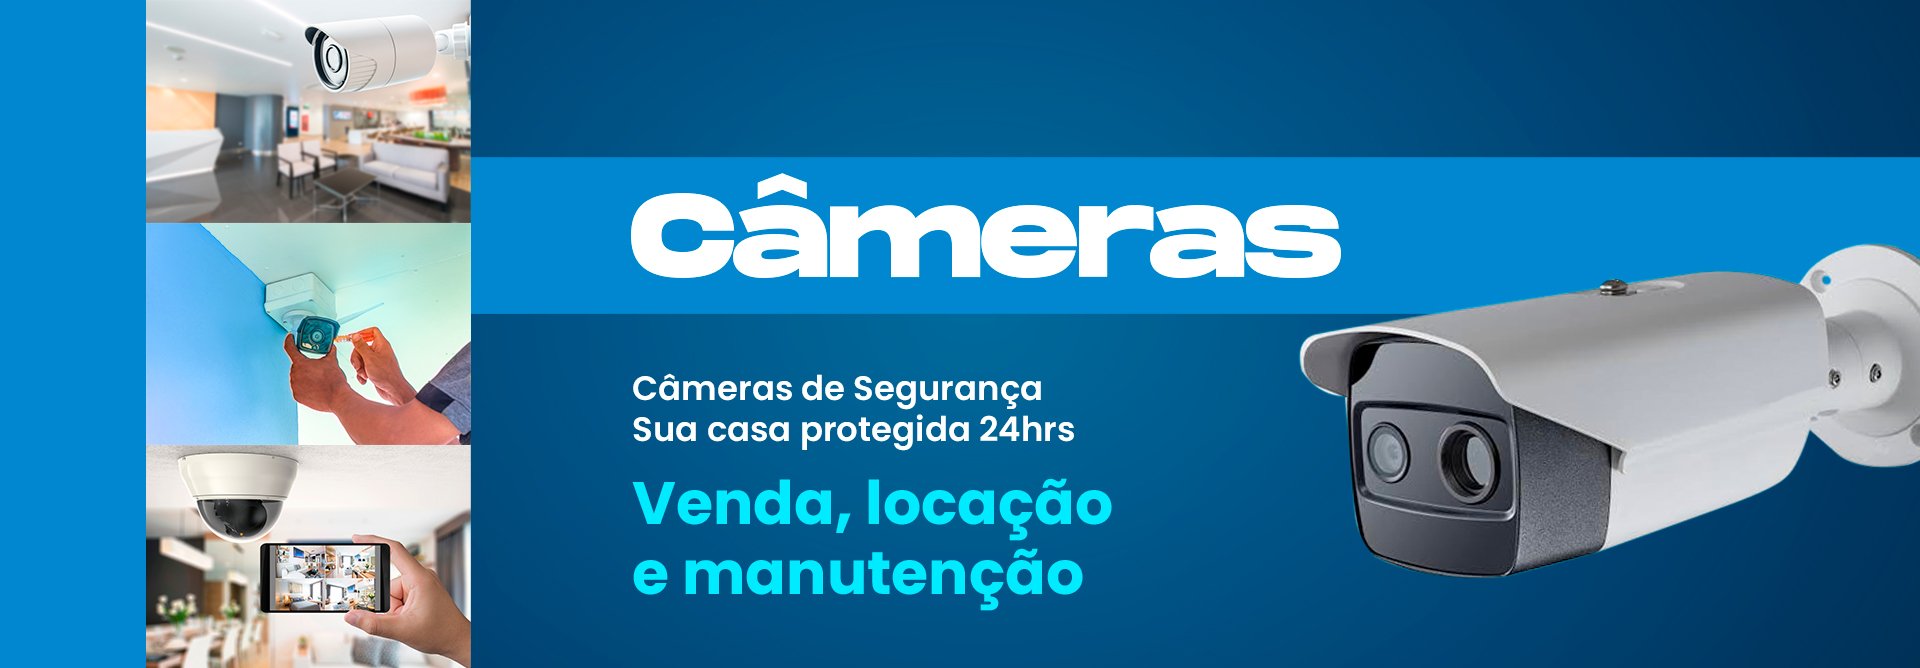 06-cameras-banner-web